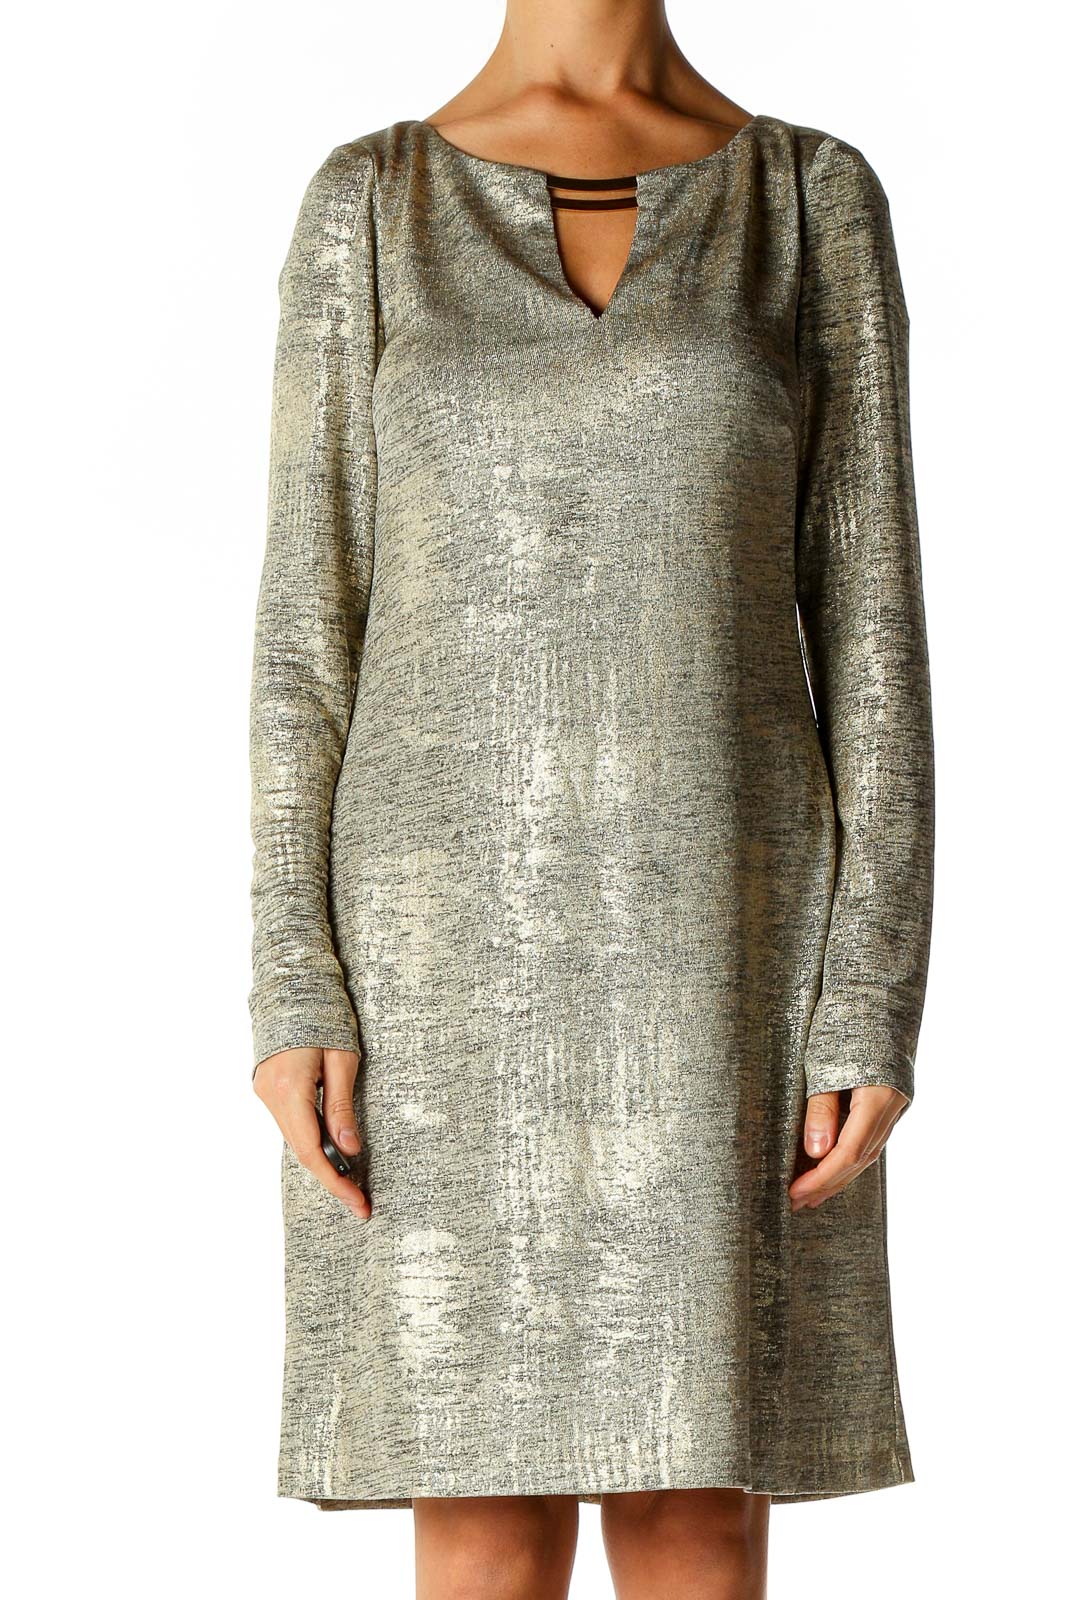 Gold Textured Metallic Cocktail A-Line Dress Front